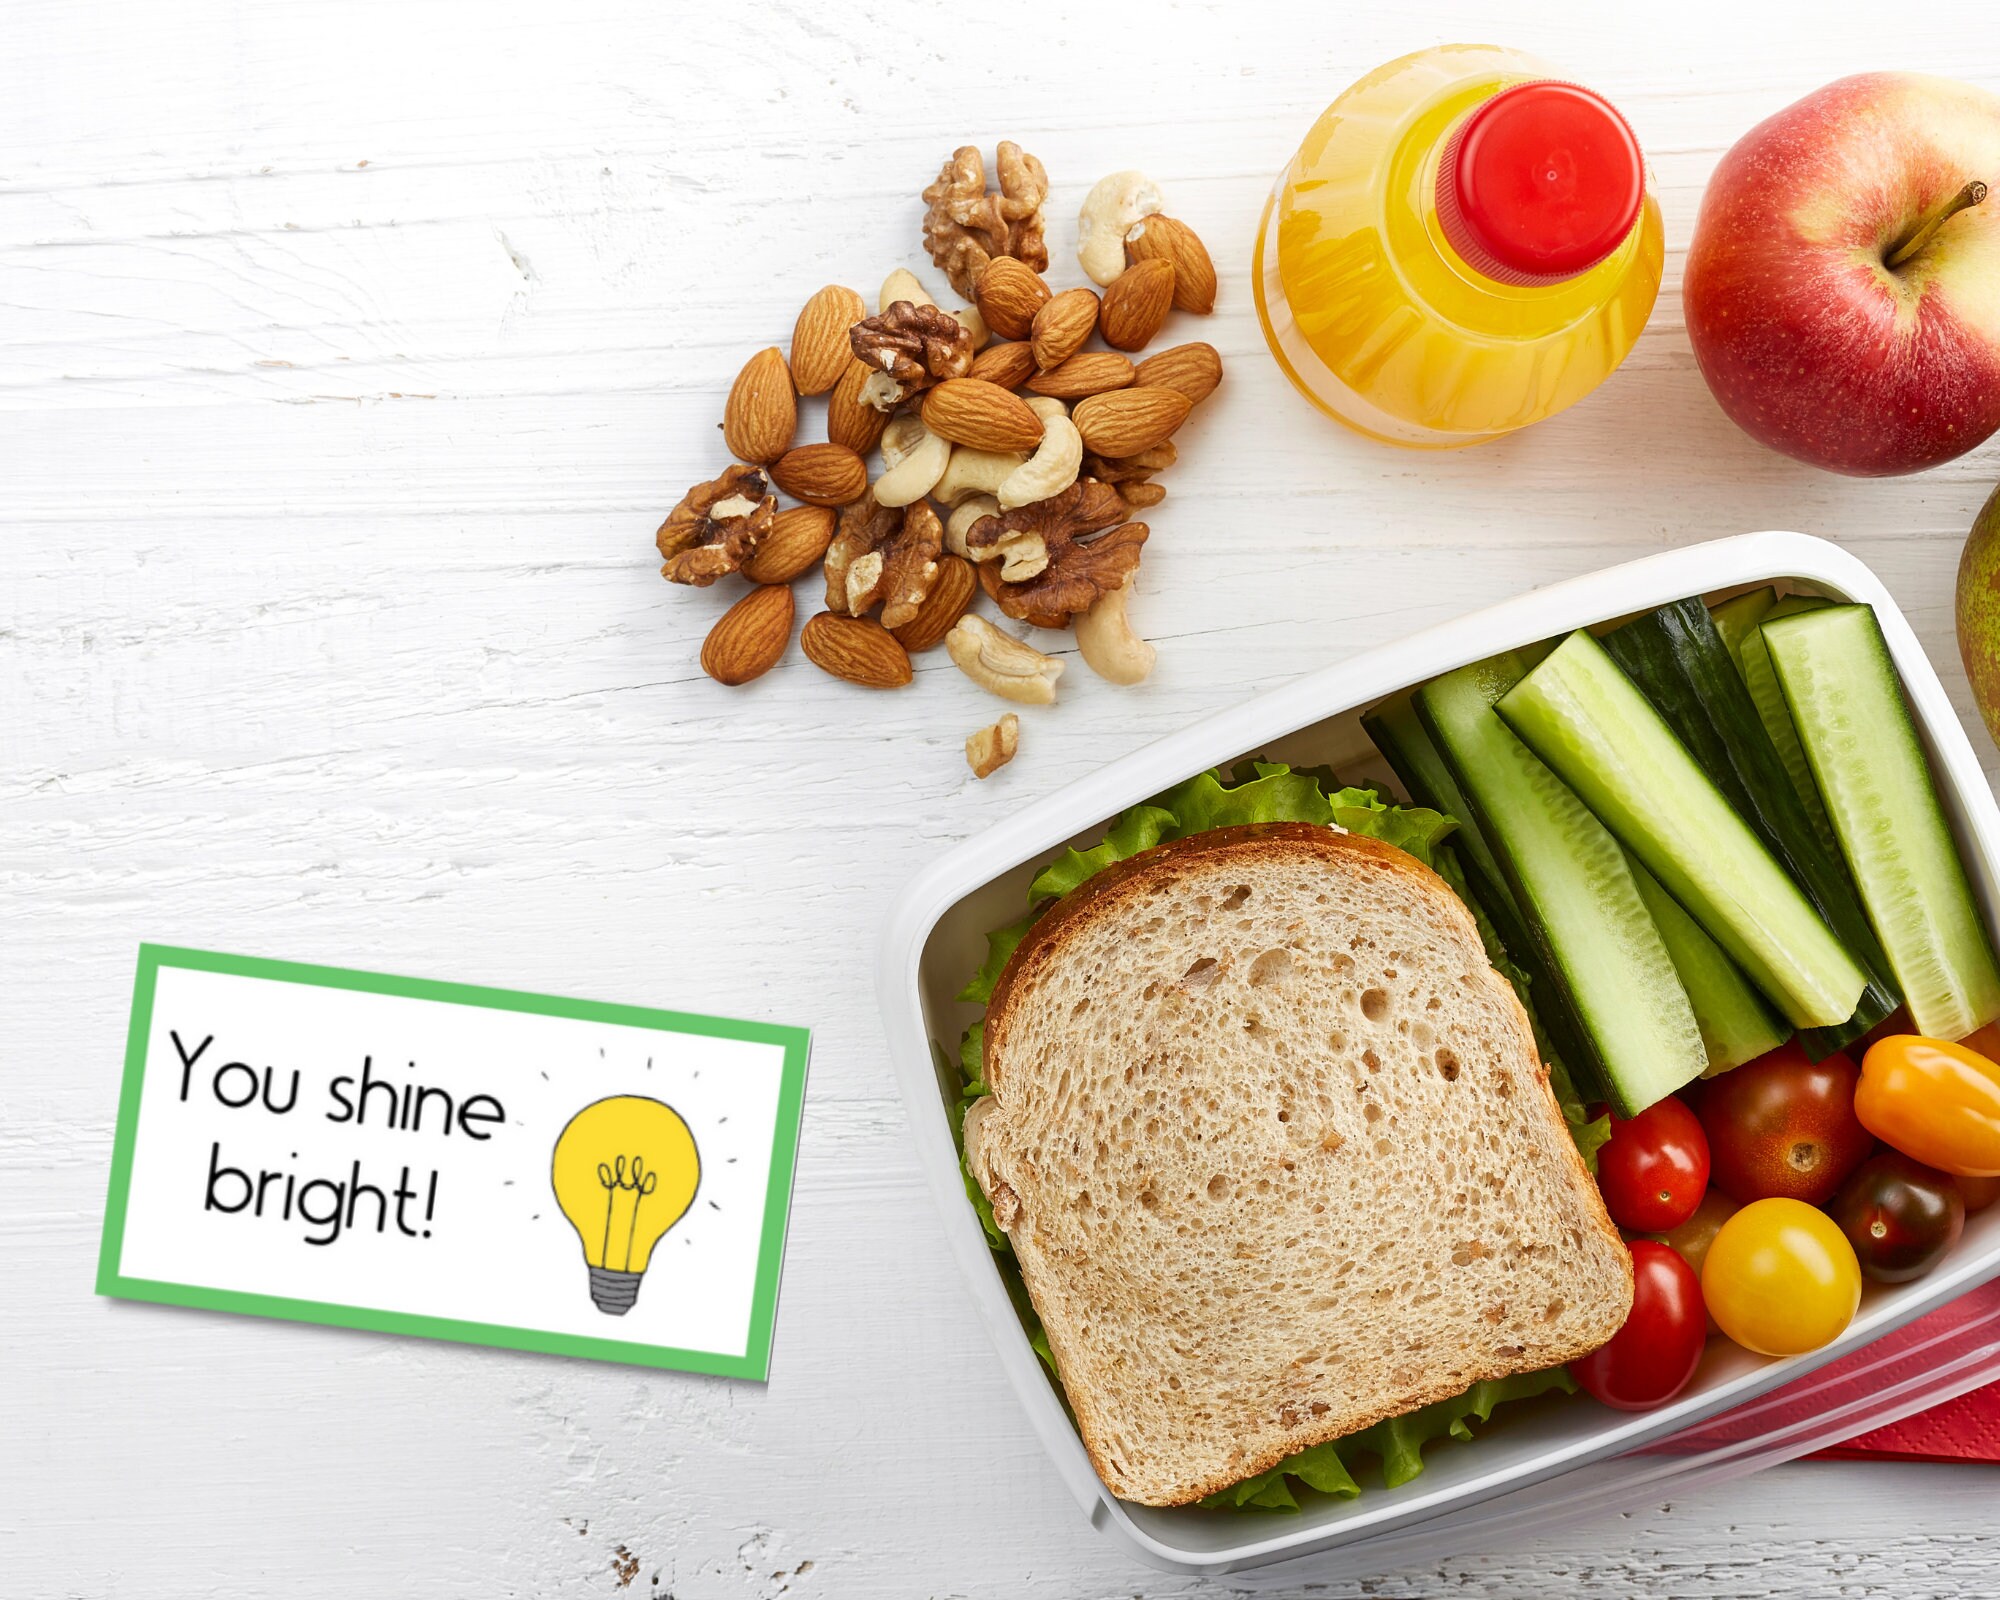 OcHIDO lunch box note for kids kindergarten,school lunch accessories for  kids-100 cute encouragement,positive